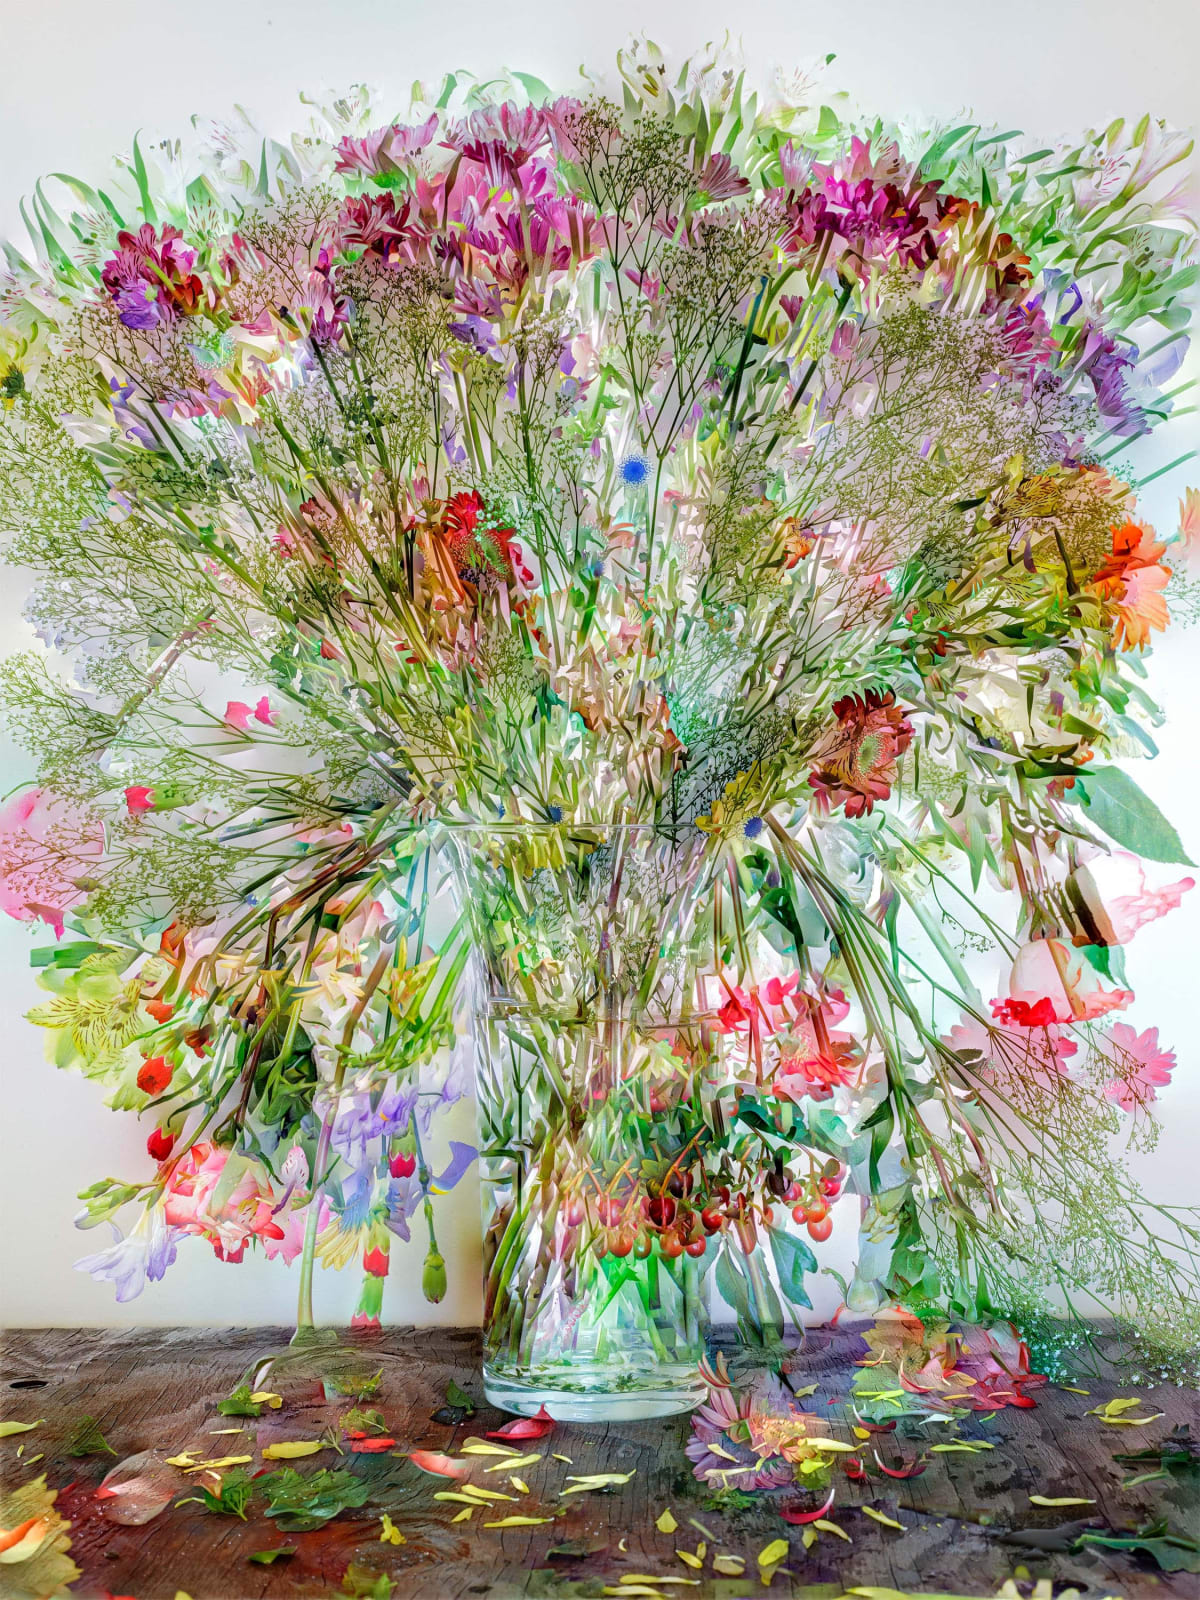 Abelardo Morell Flowers for Lisa #1 composite vase of colorful flowers